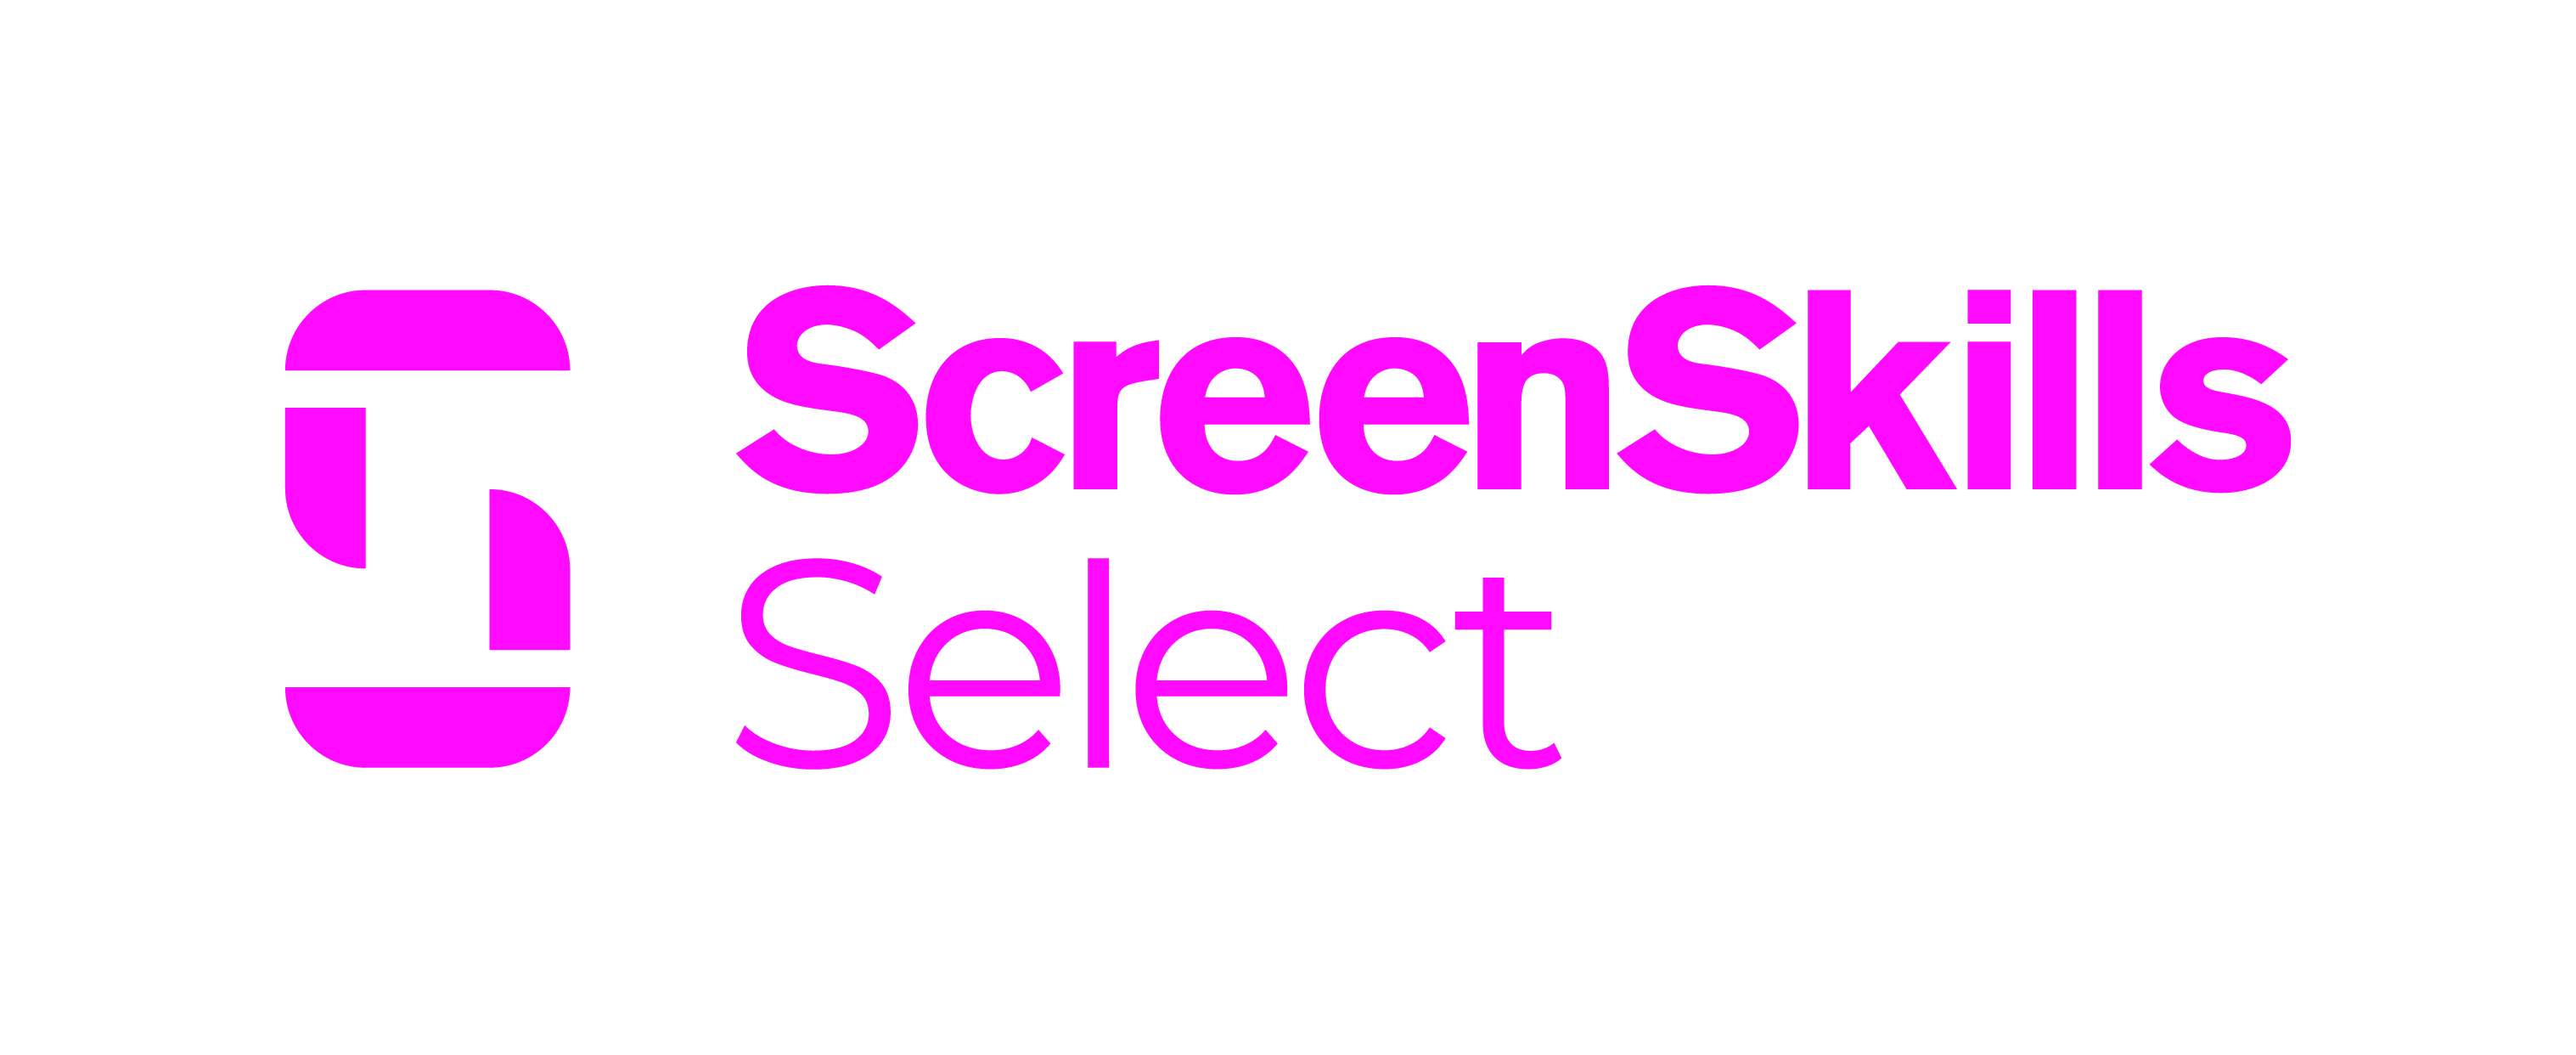 ScreenSkills Select Marque Crimson CMYKjpj 010